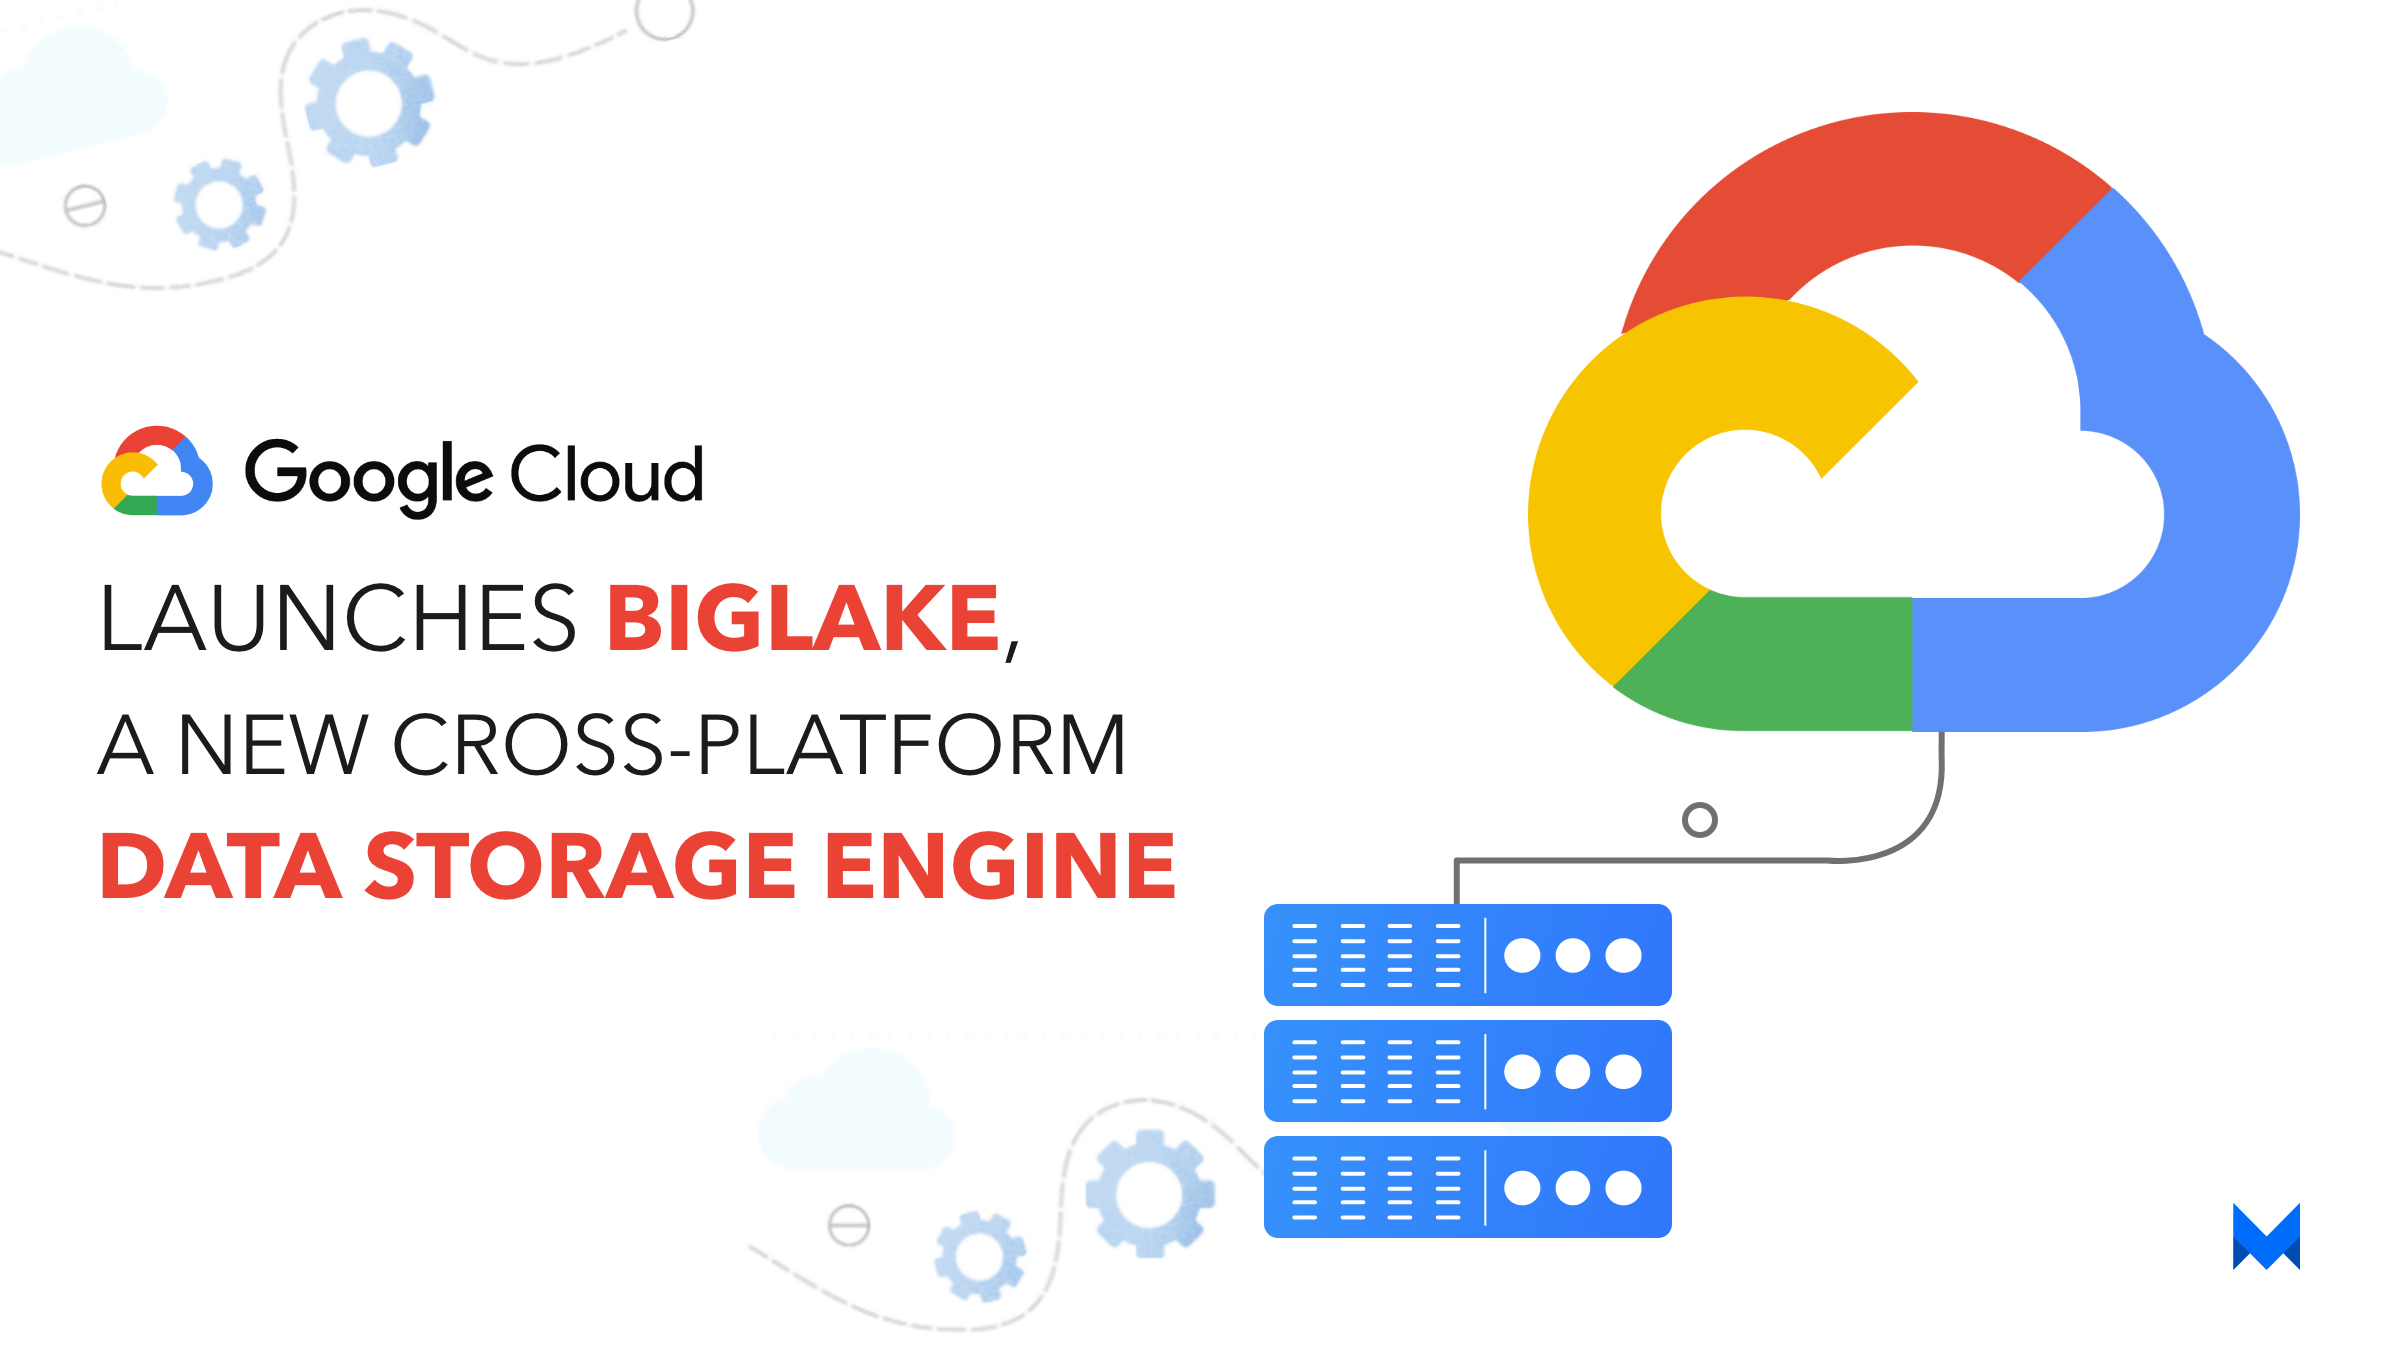 Google Cloud launches BigLake, a new cross-platform data storage engine